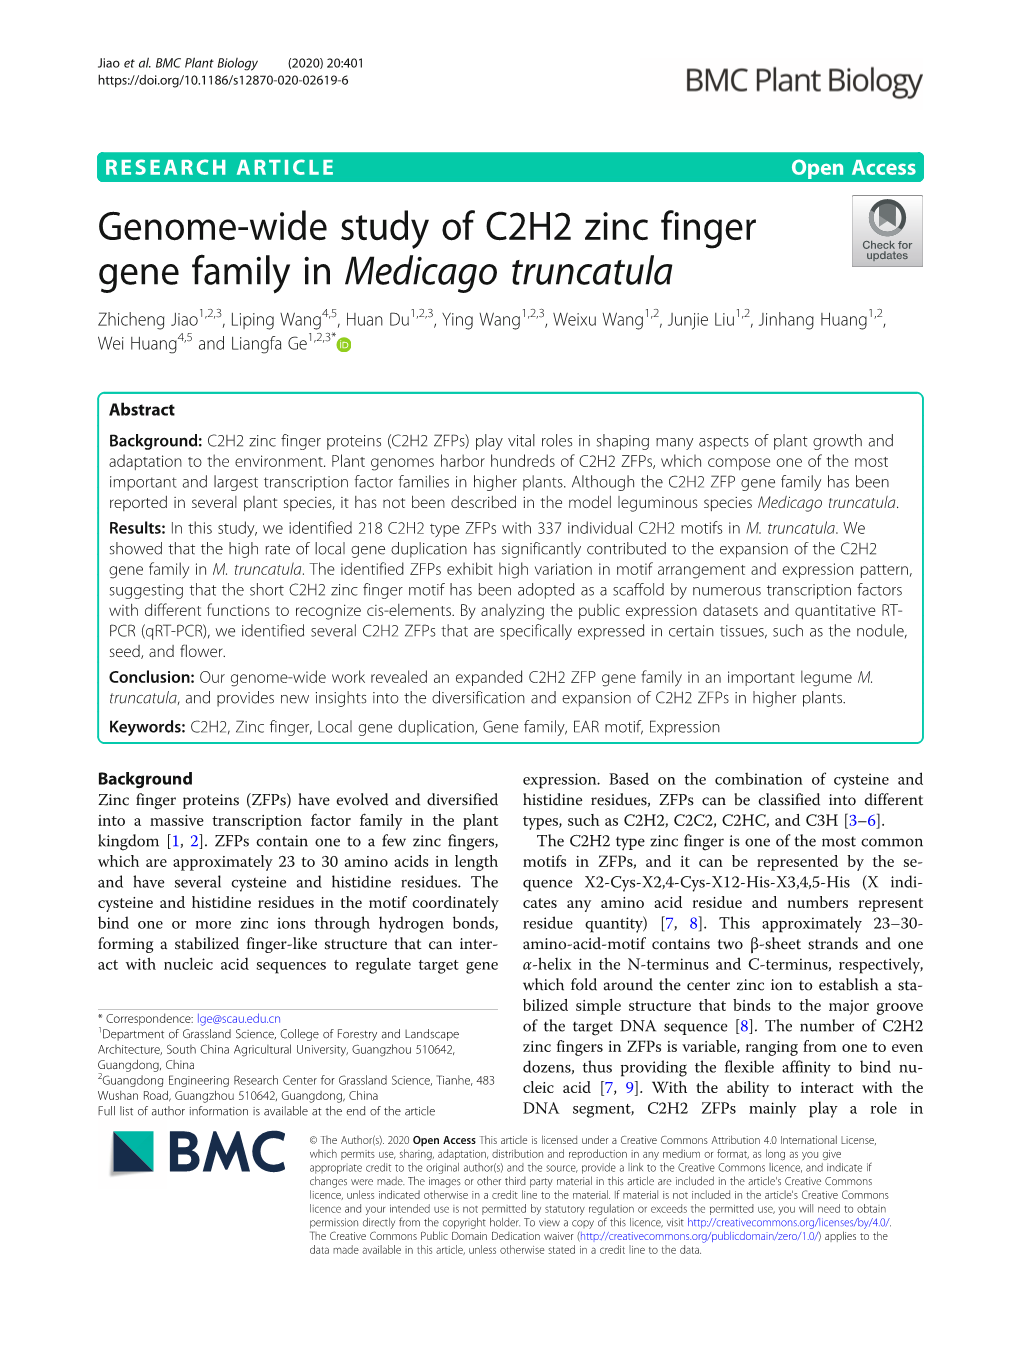 Genome-Wide Study of C2H2 Zinc Finger Gene Family in Medicago